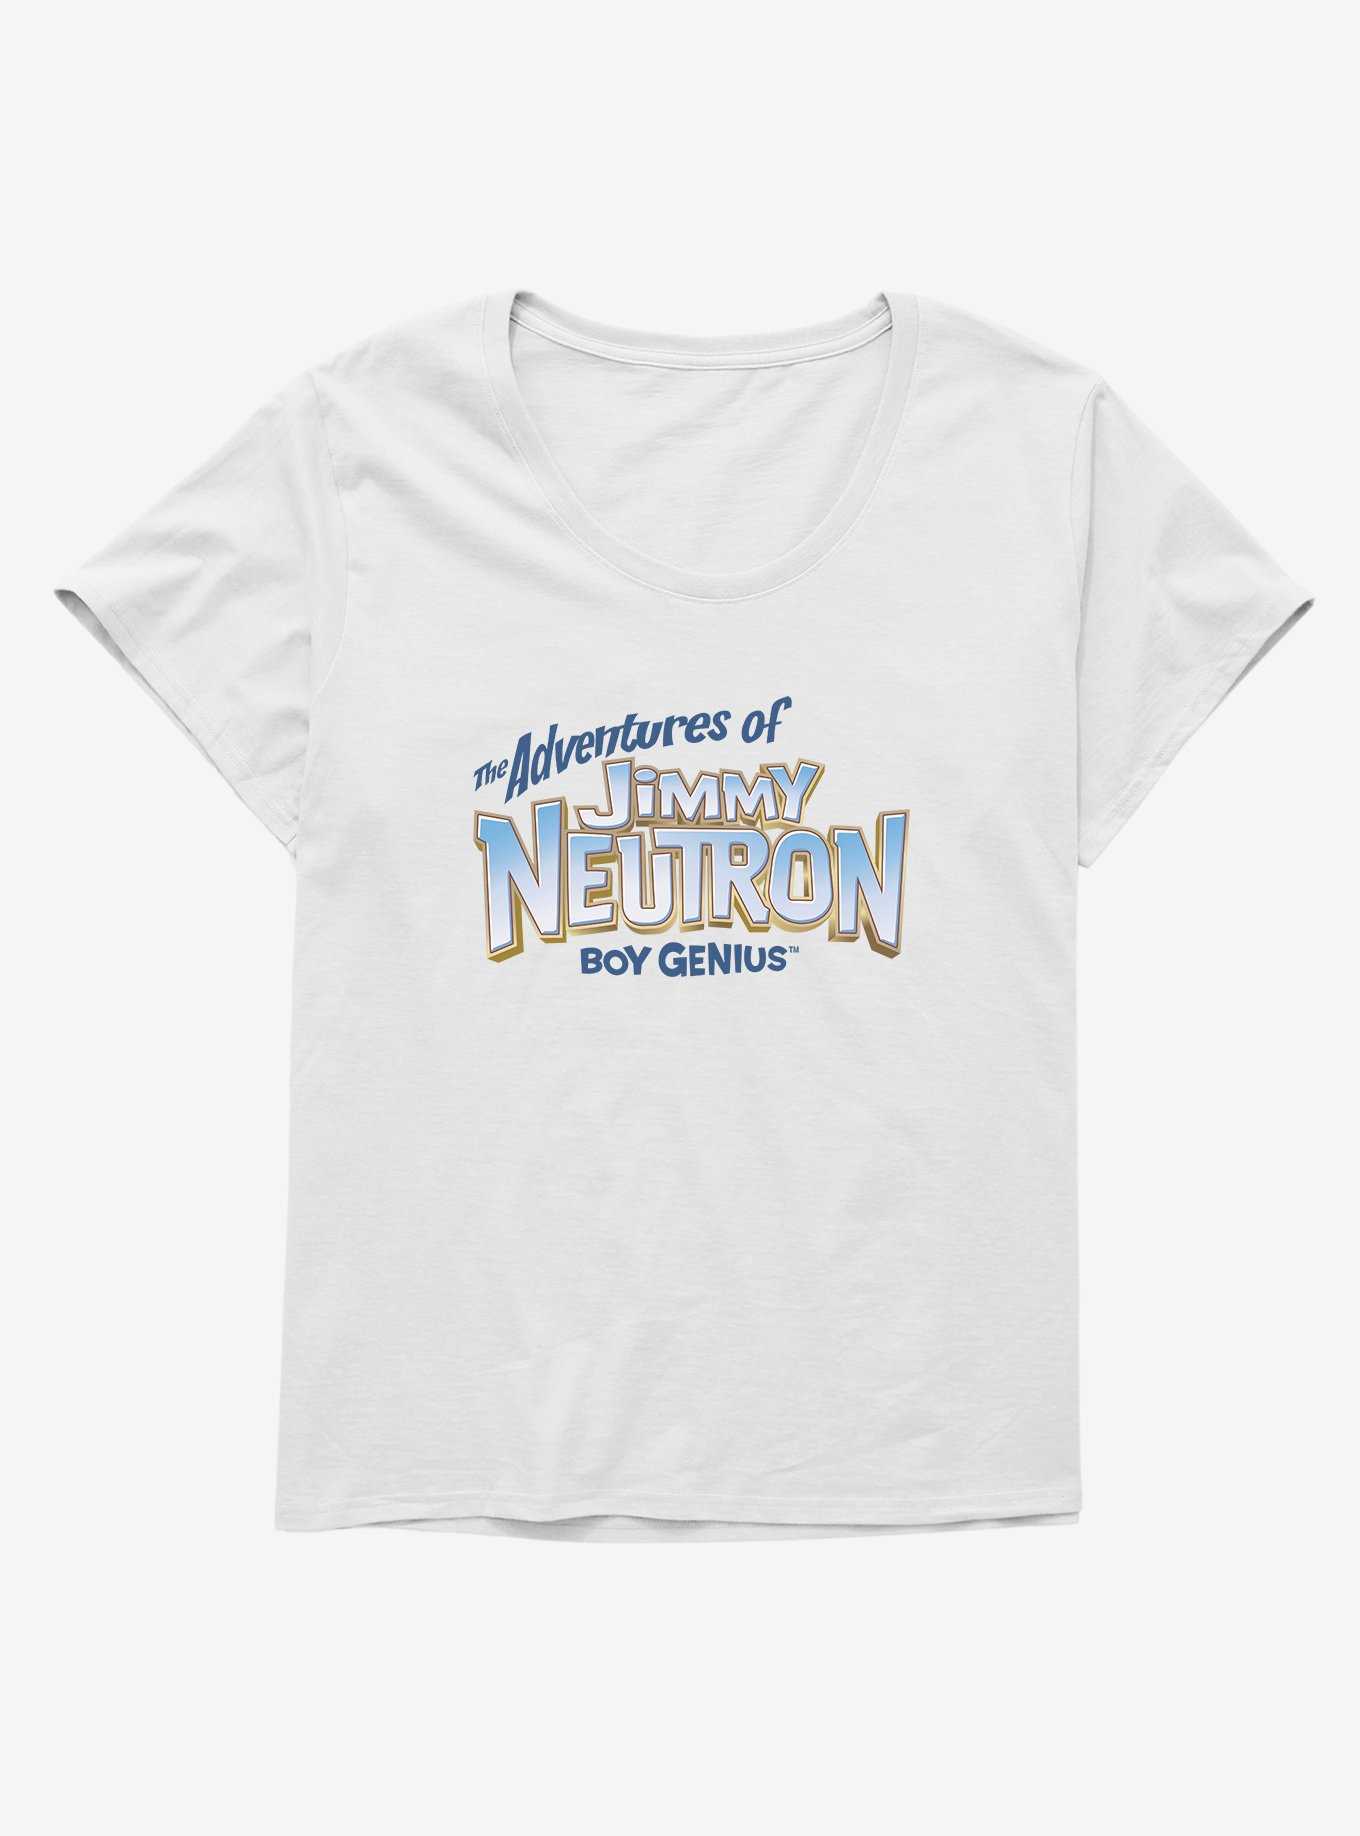 The Adventures Of Jimmy Neutron Boy Genius Title Logo Girls T-Shirt Plus Size, , hi-res